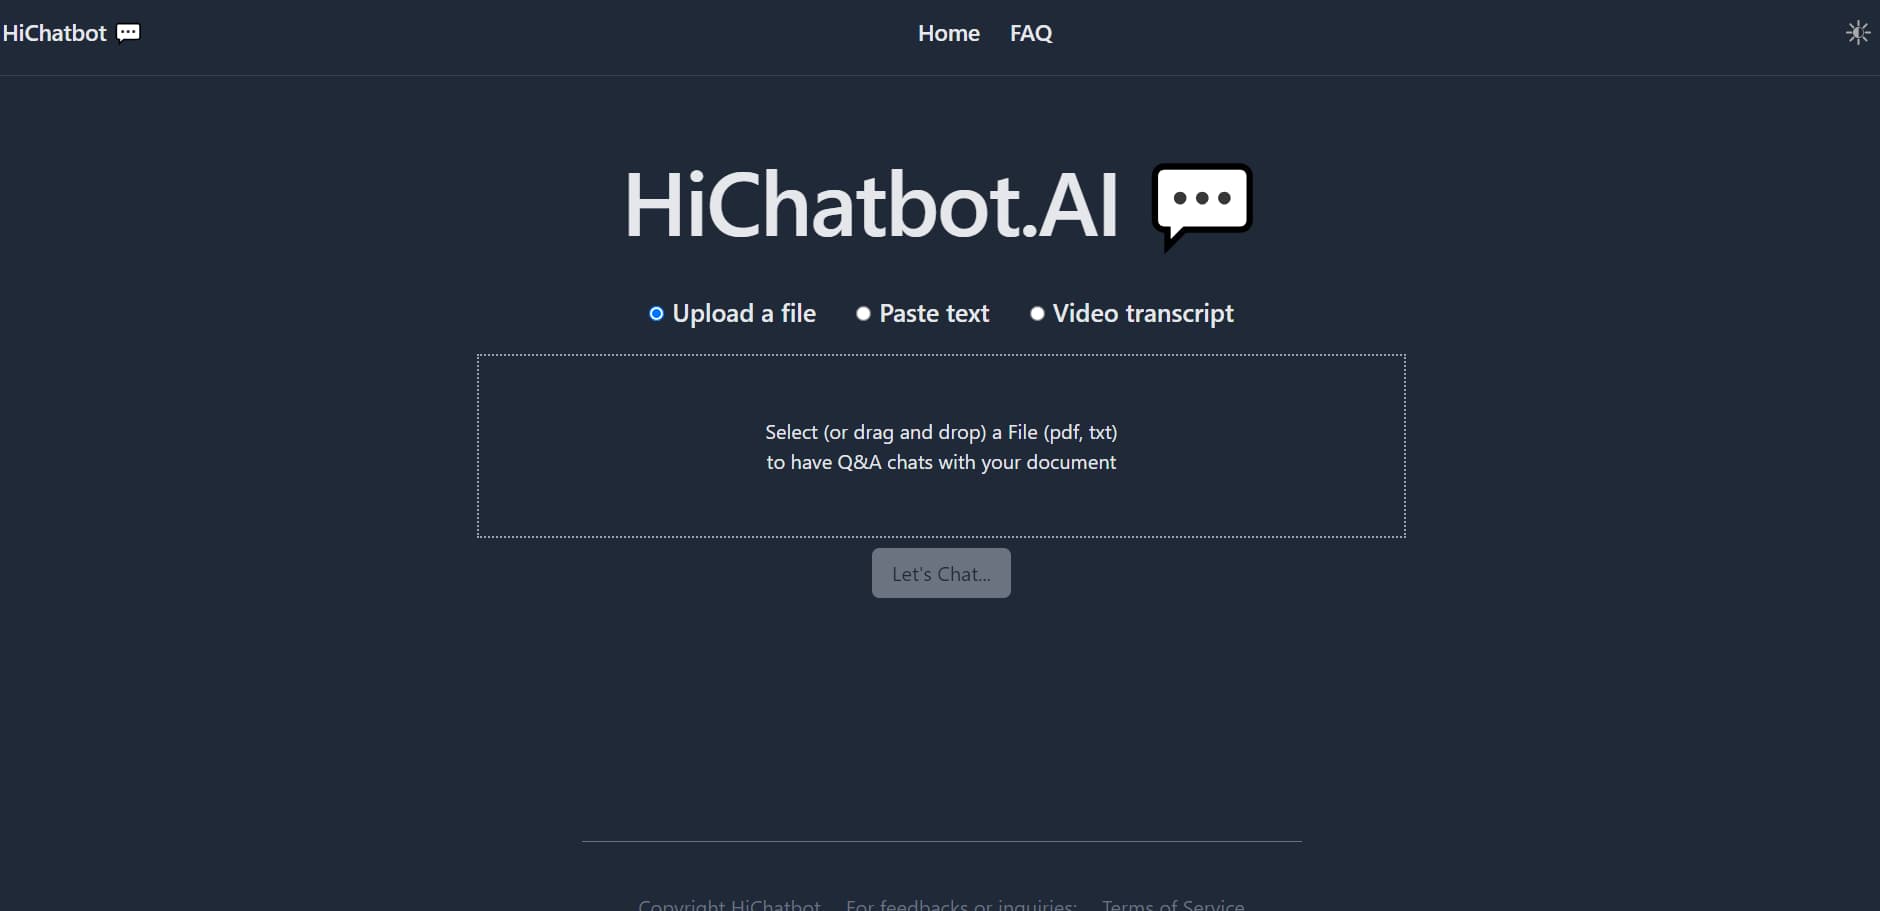 HiChatbot